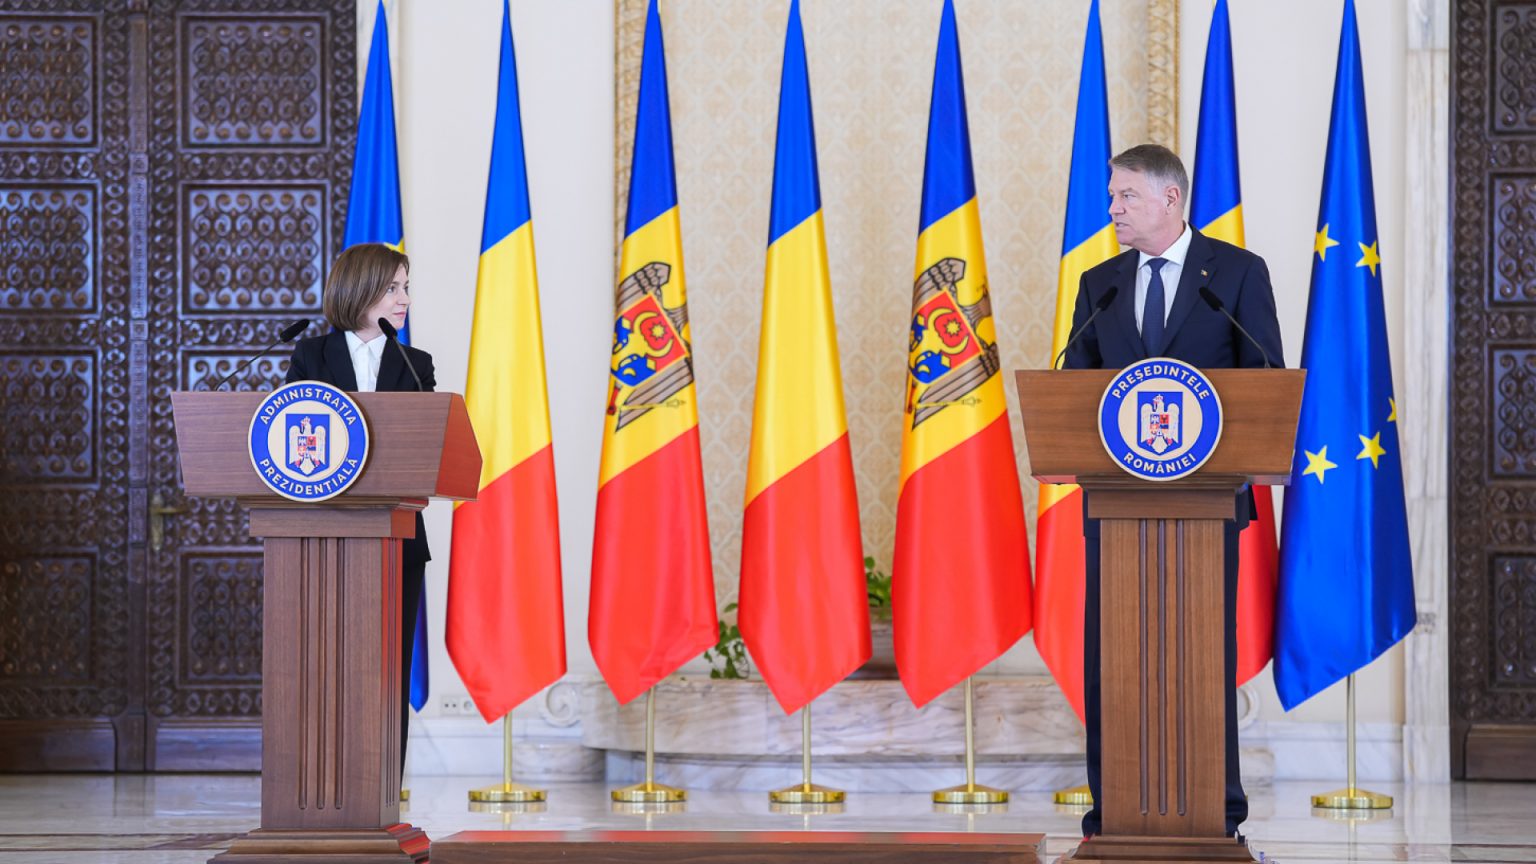 Moldova On The Brink Of War?